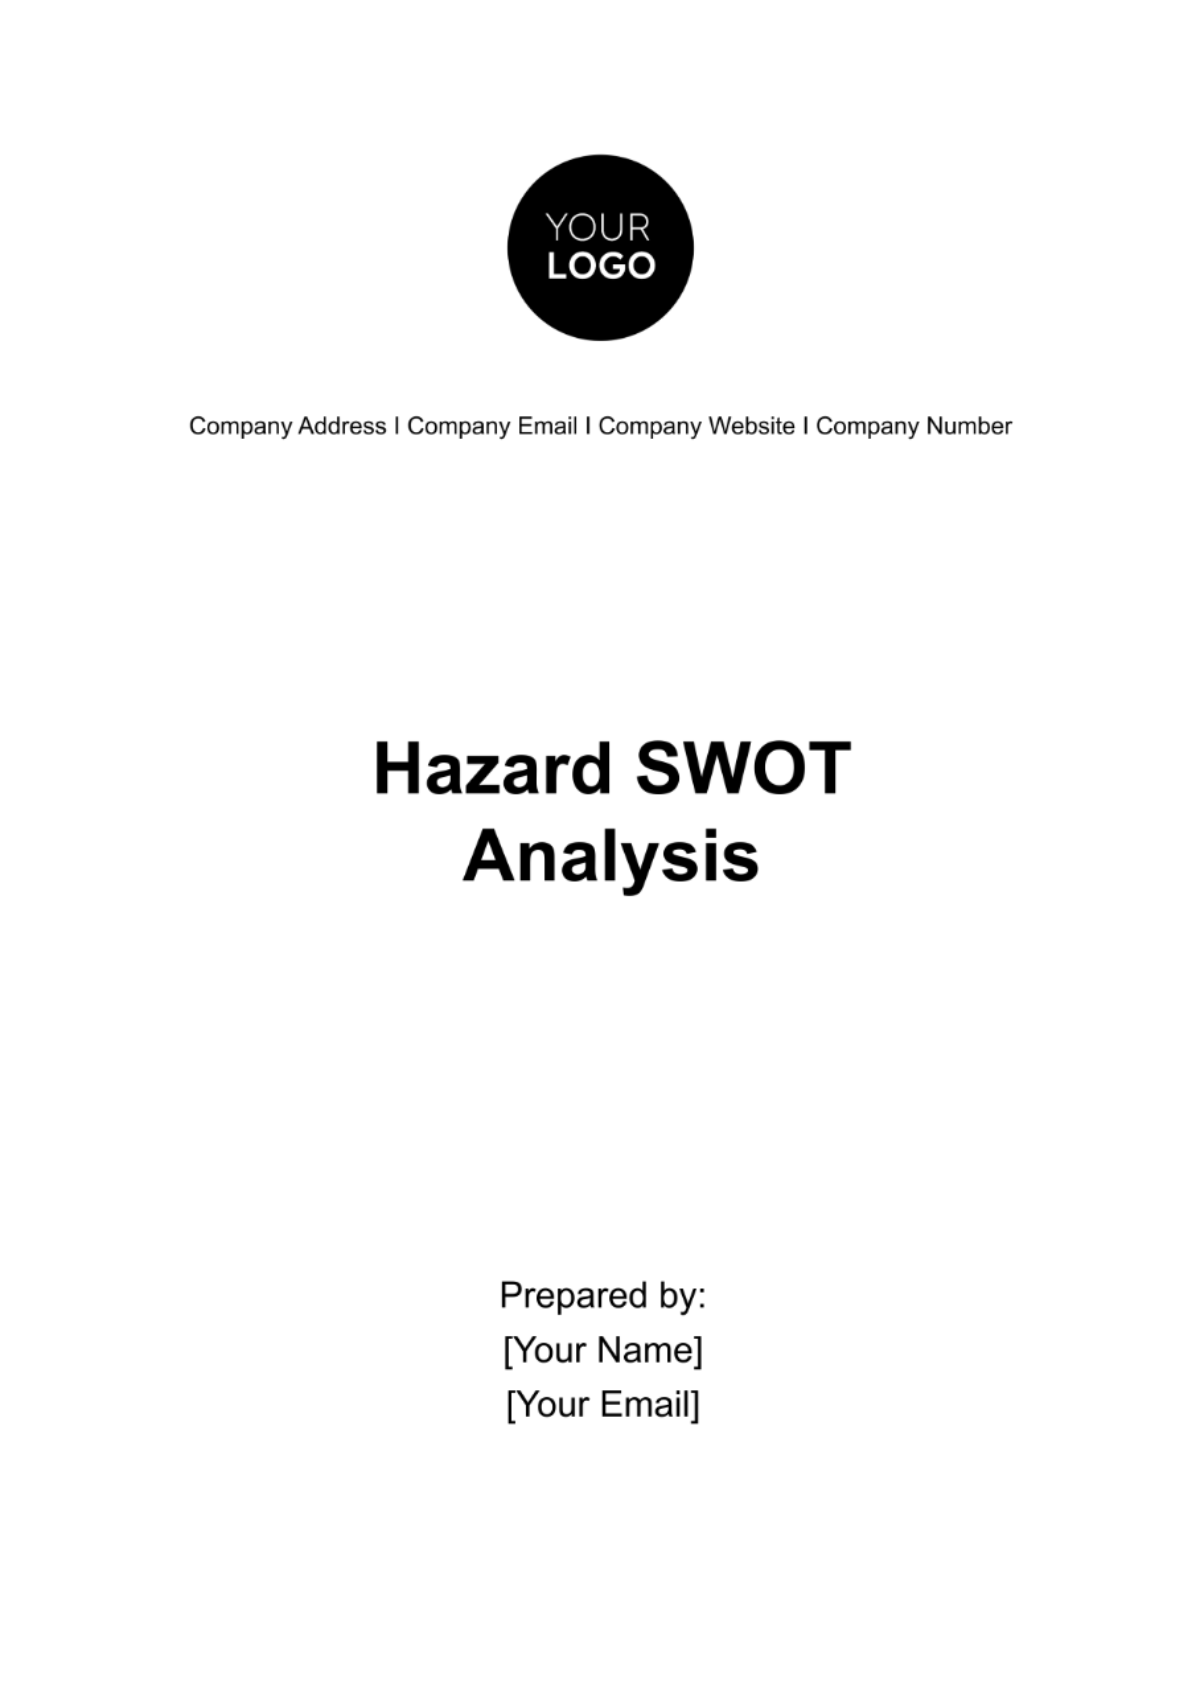 Hazard SWOT Analysis Template